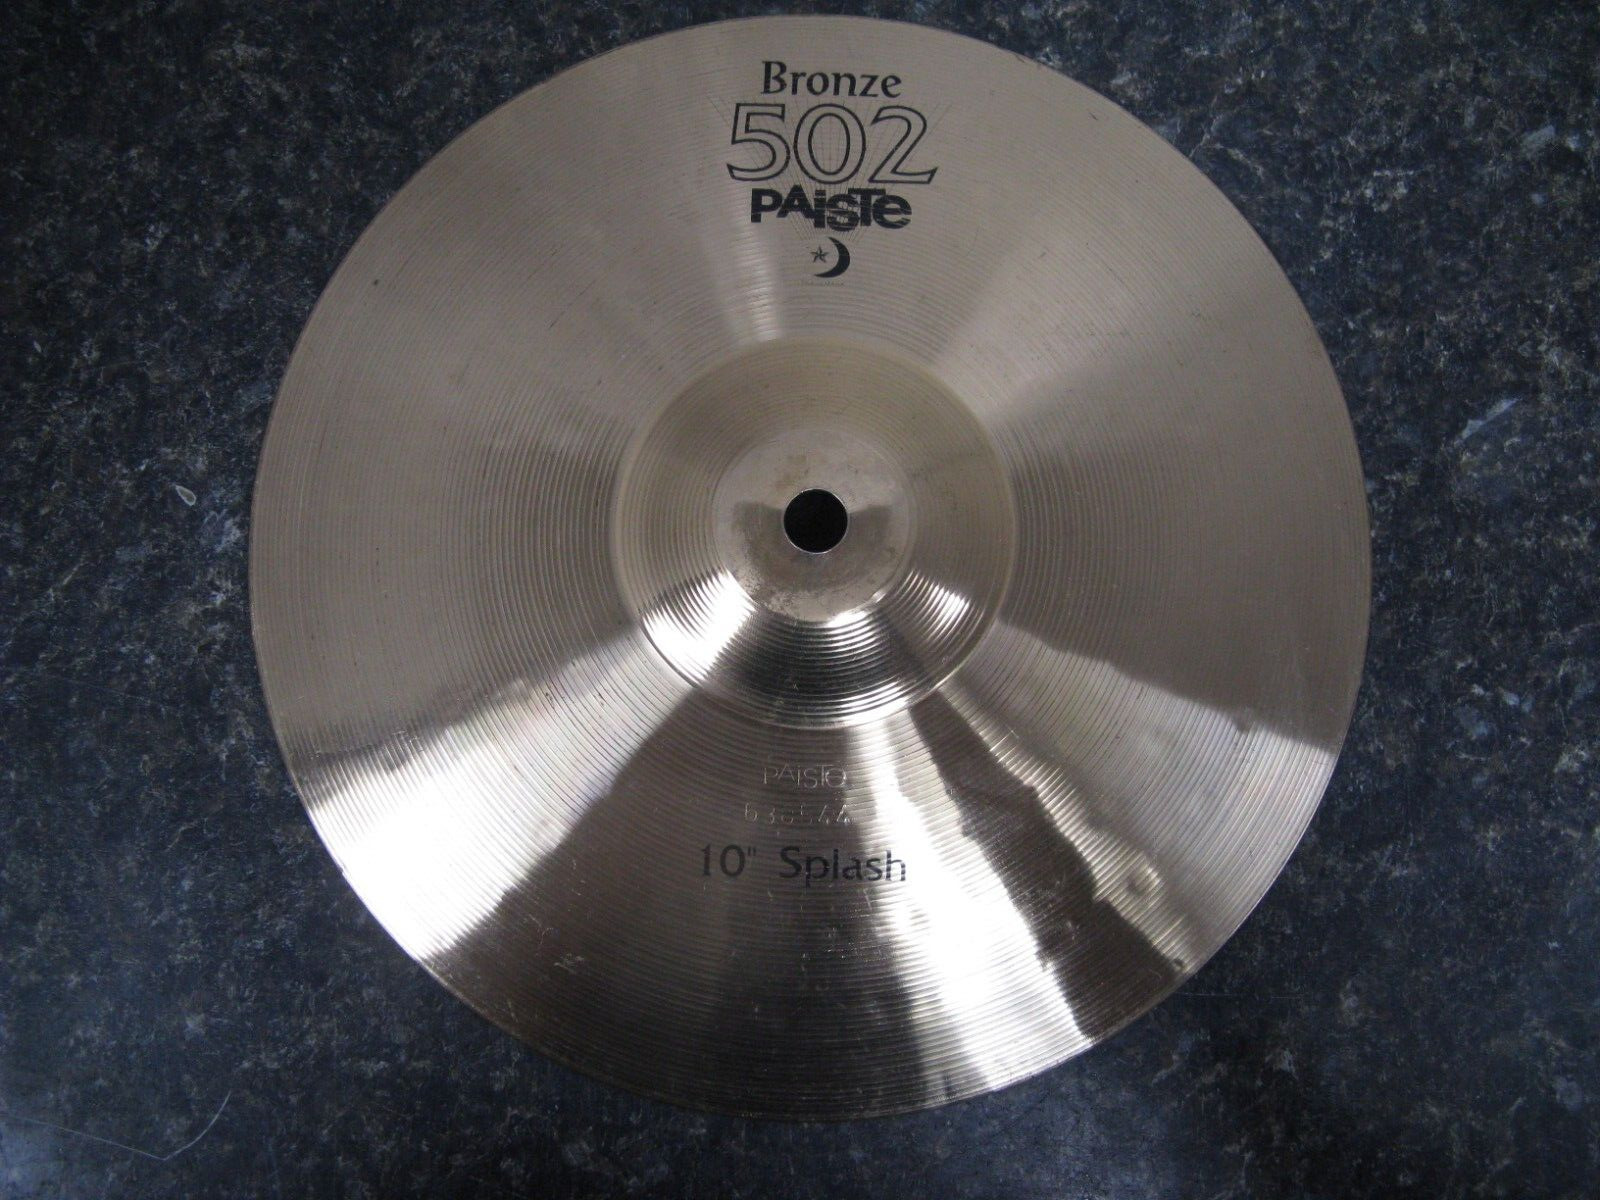 Paiste Bronze 502 630544 10" Splash Cymbal Drum Accessory